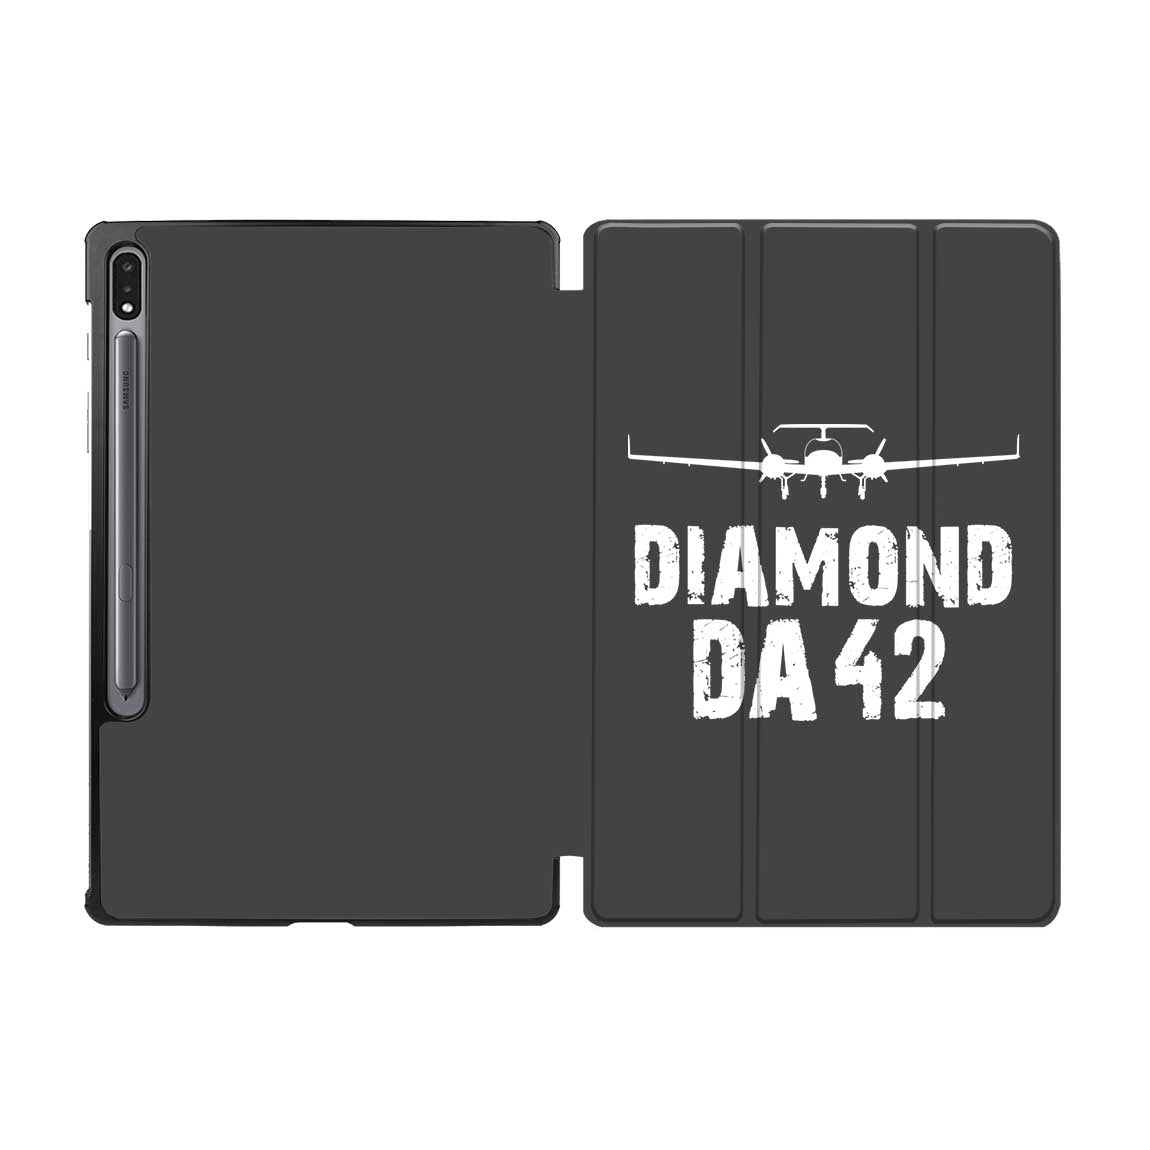 Diamond DA42 & Plane Designed Samsung Tablet Cases